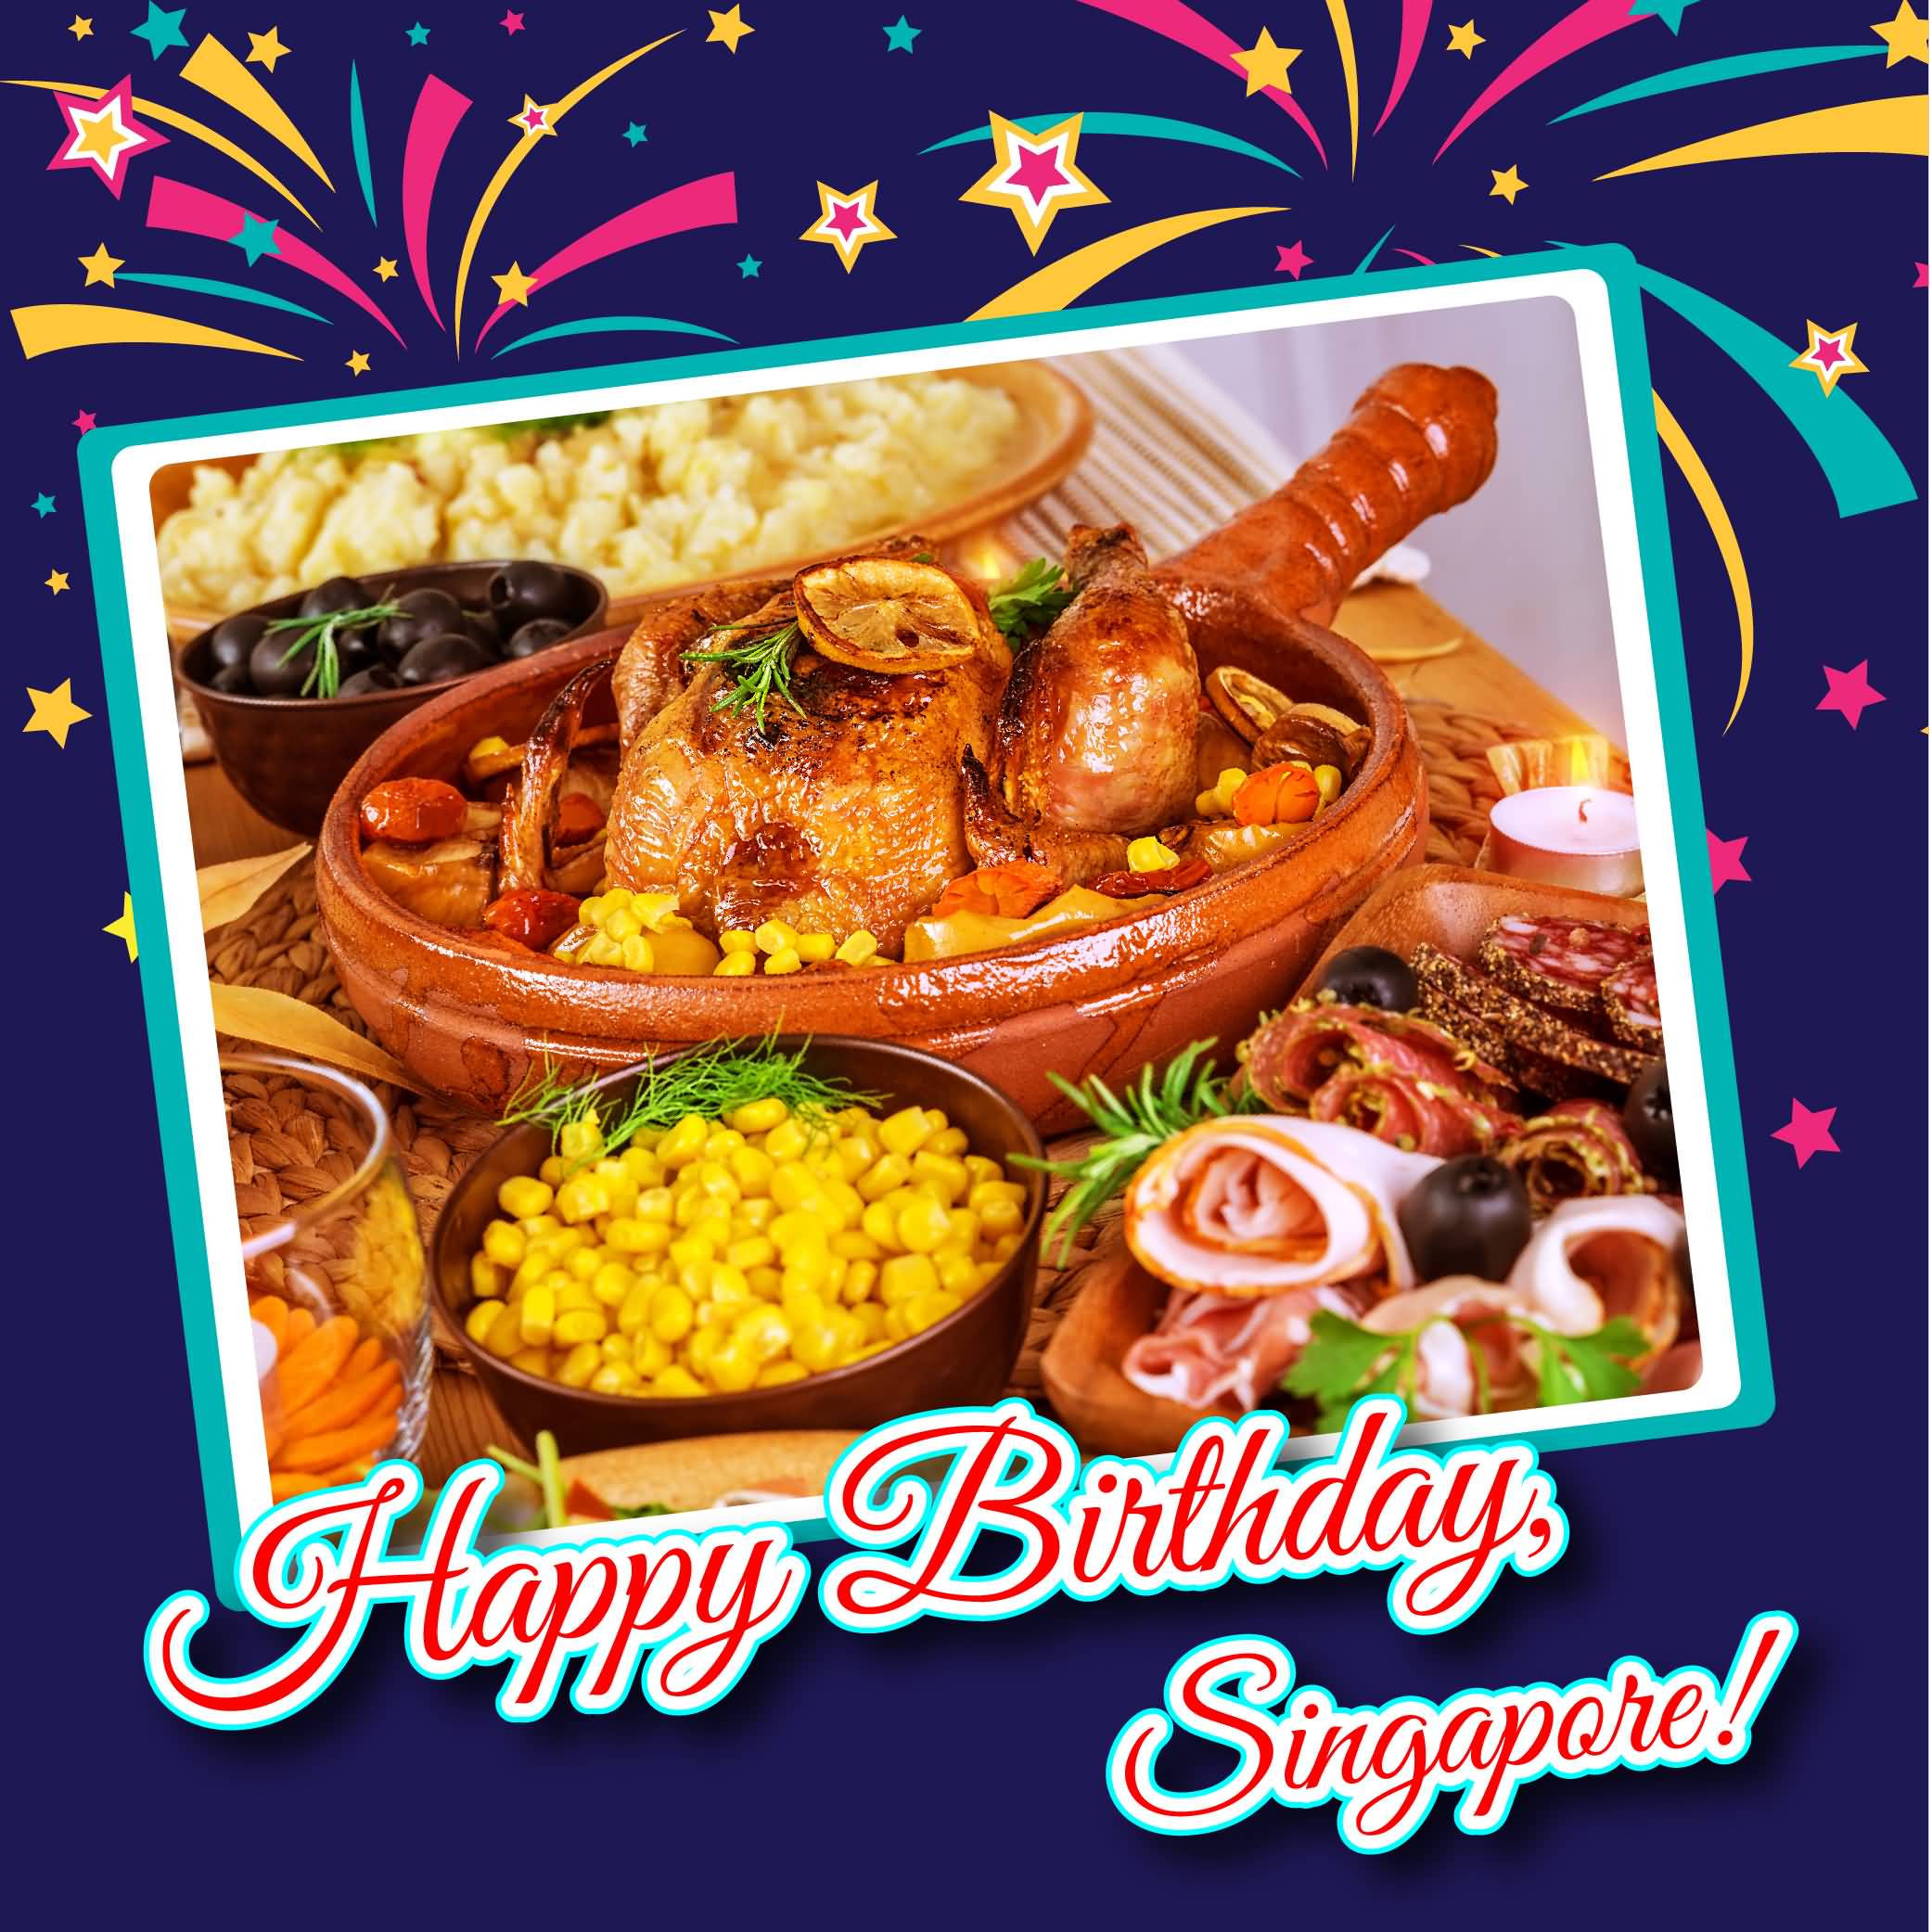 Happy Birthday Singapore Delicious Food Picture